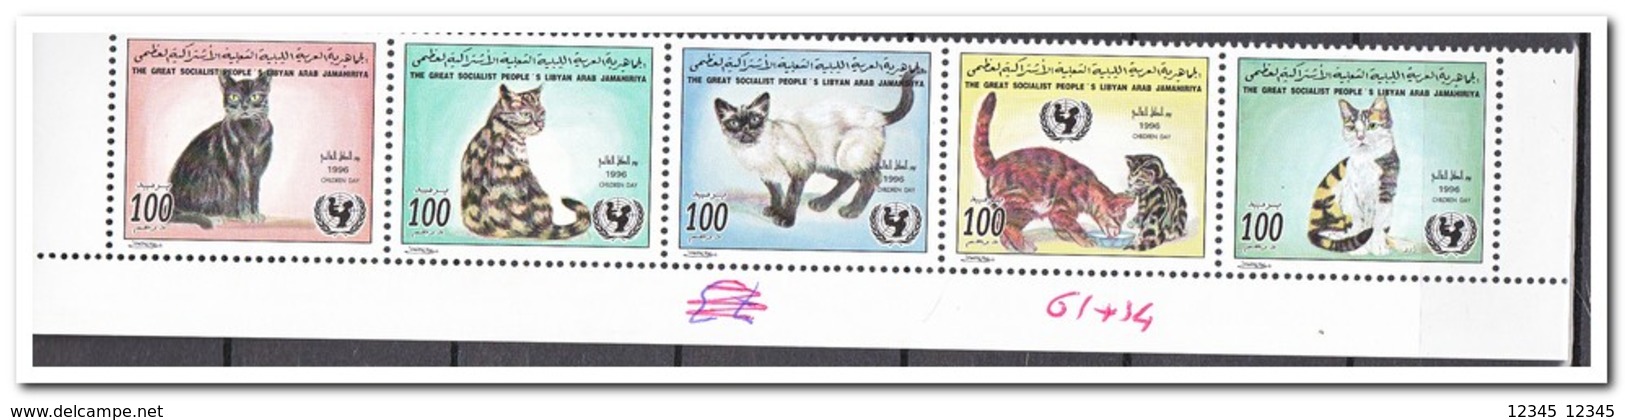 Libië 1996, Postfris MNH, Cats - Libië